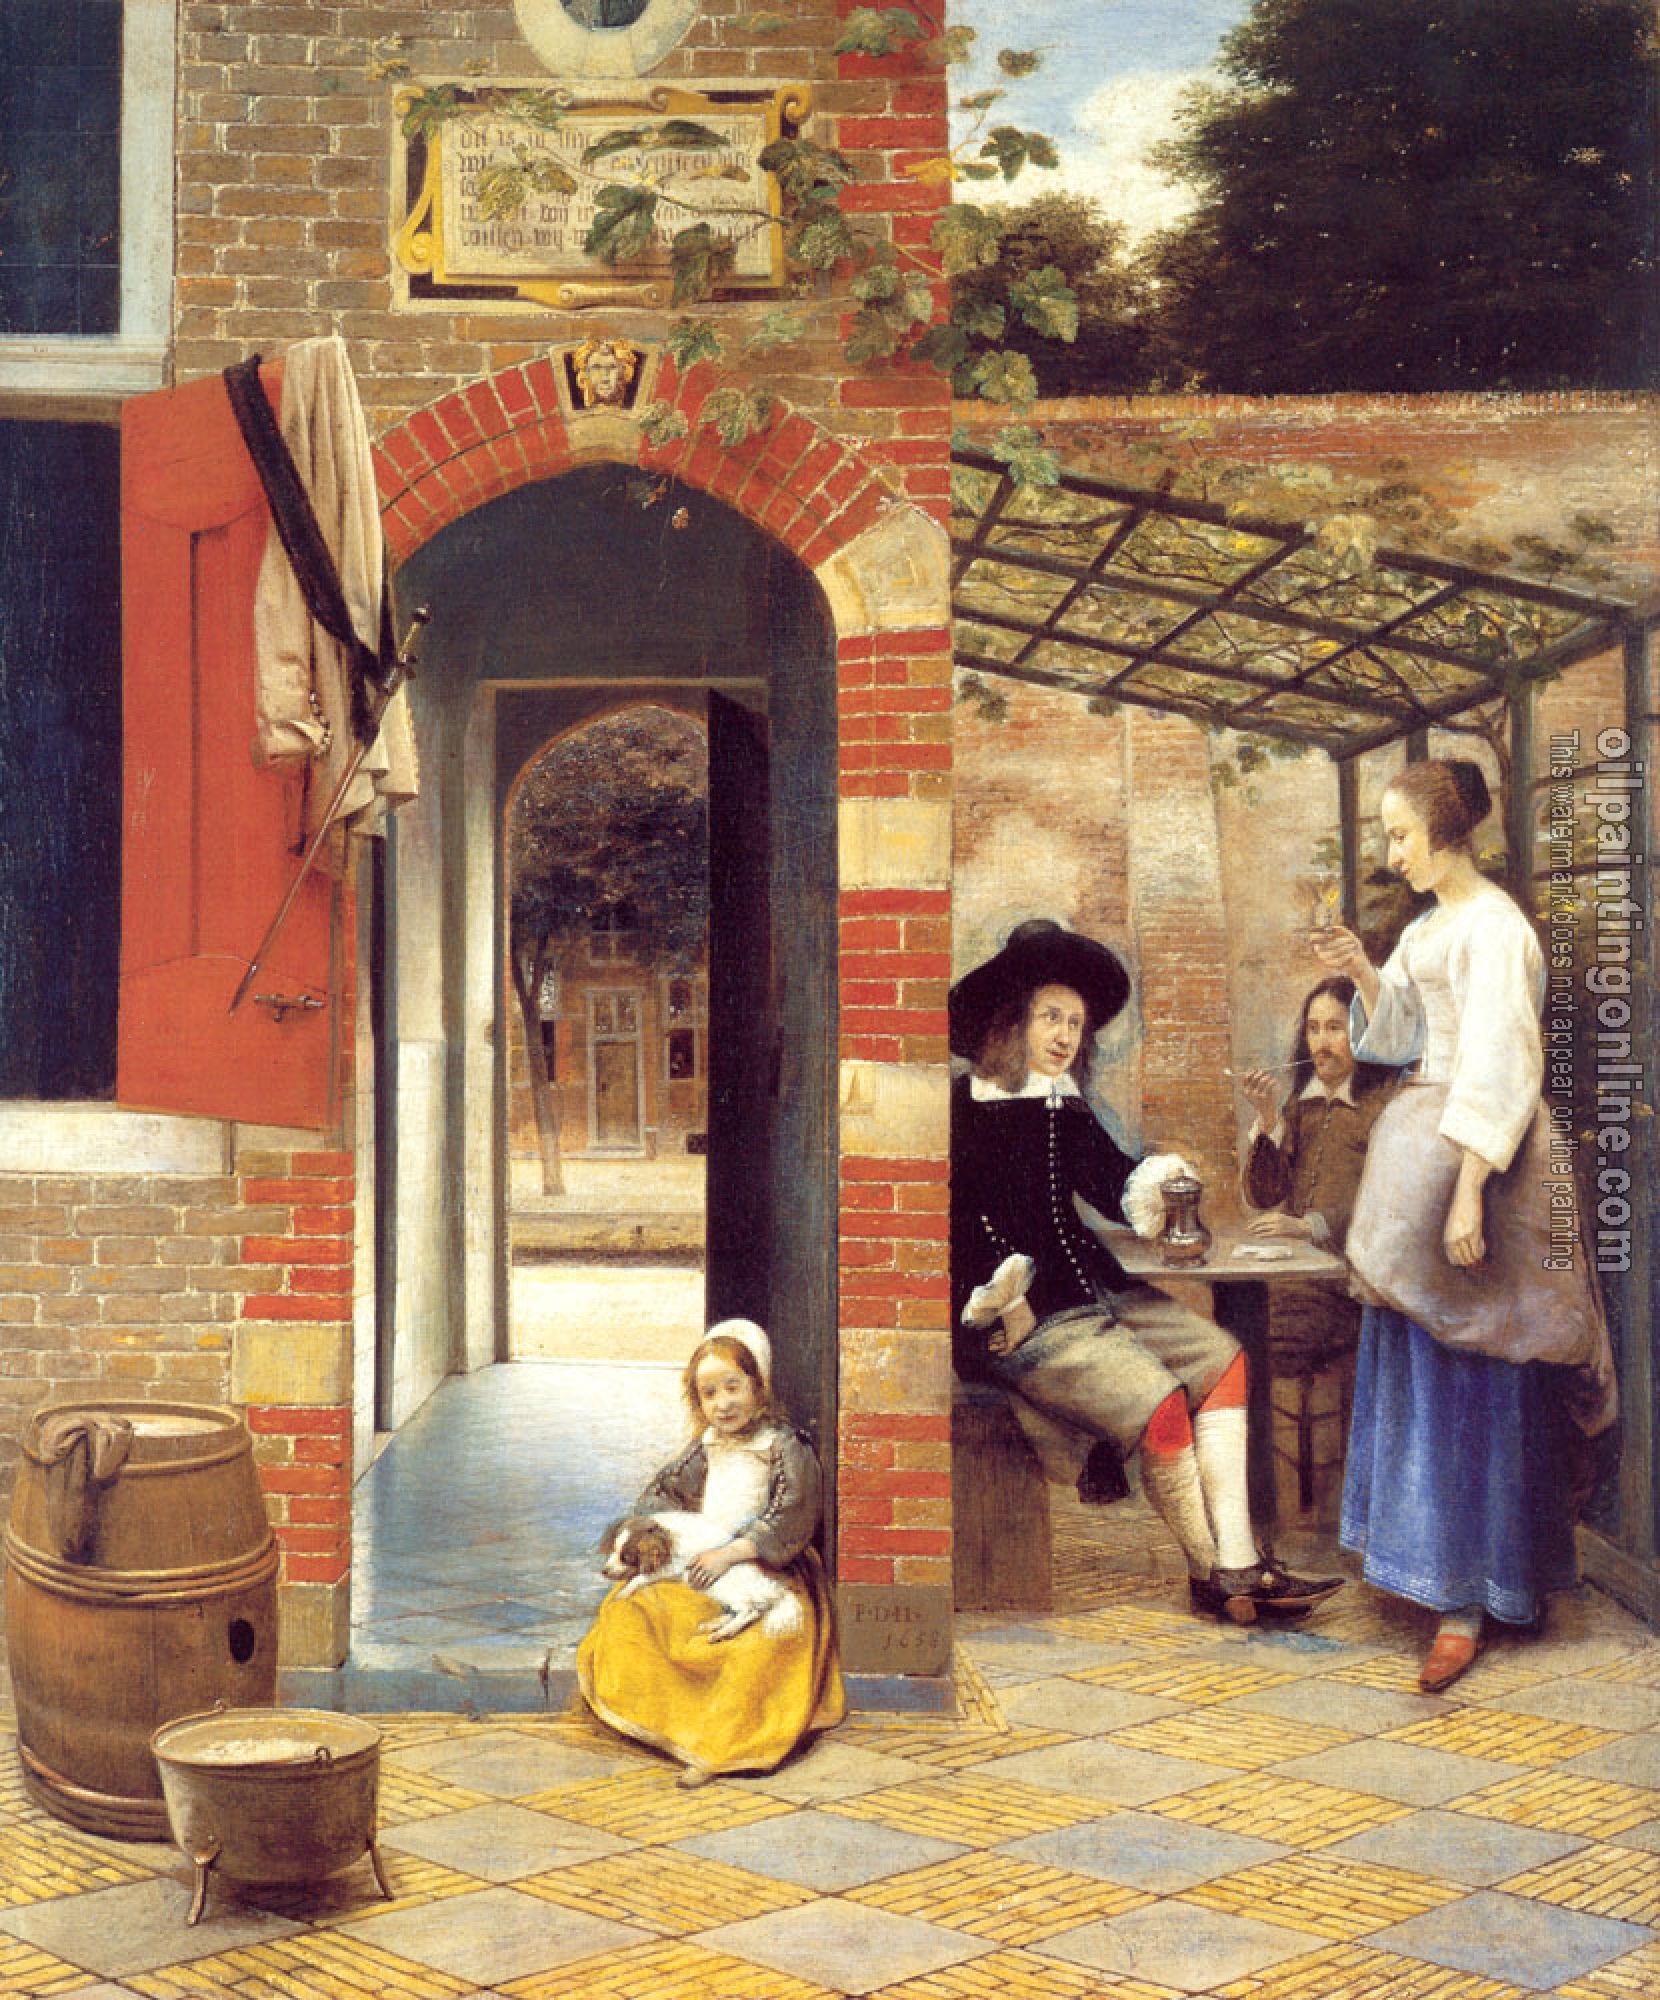 Pieter de Hooch - Figures Drinking in a Courtyard